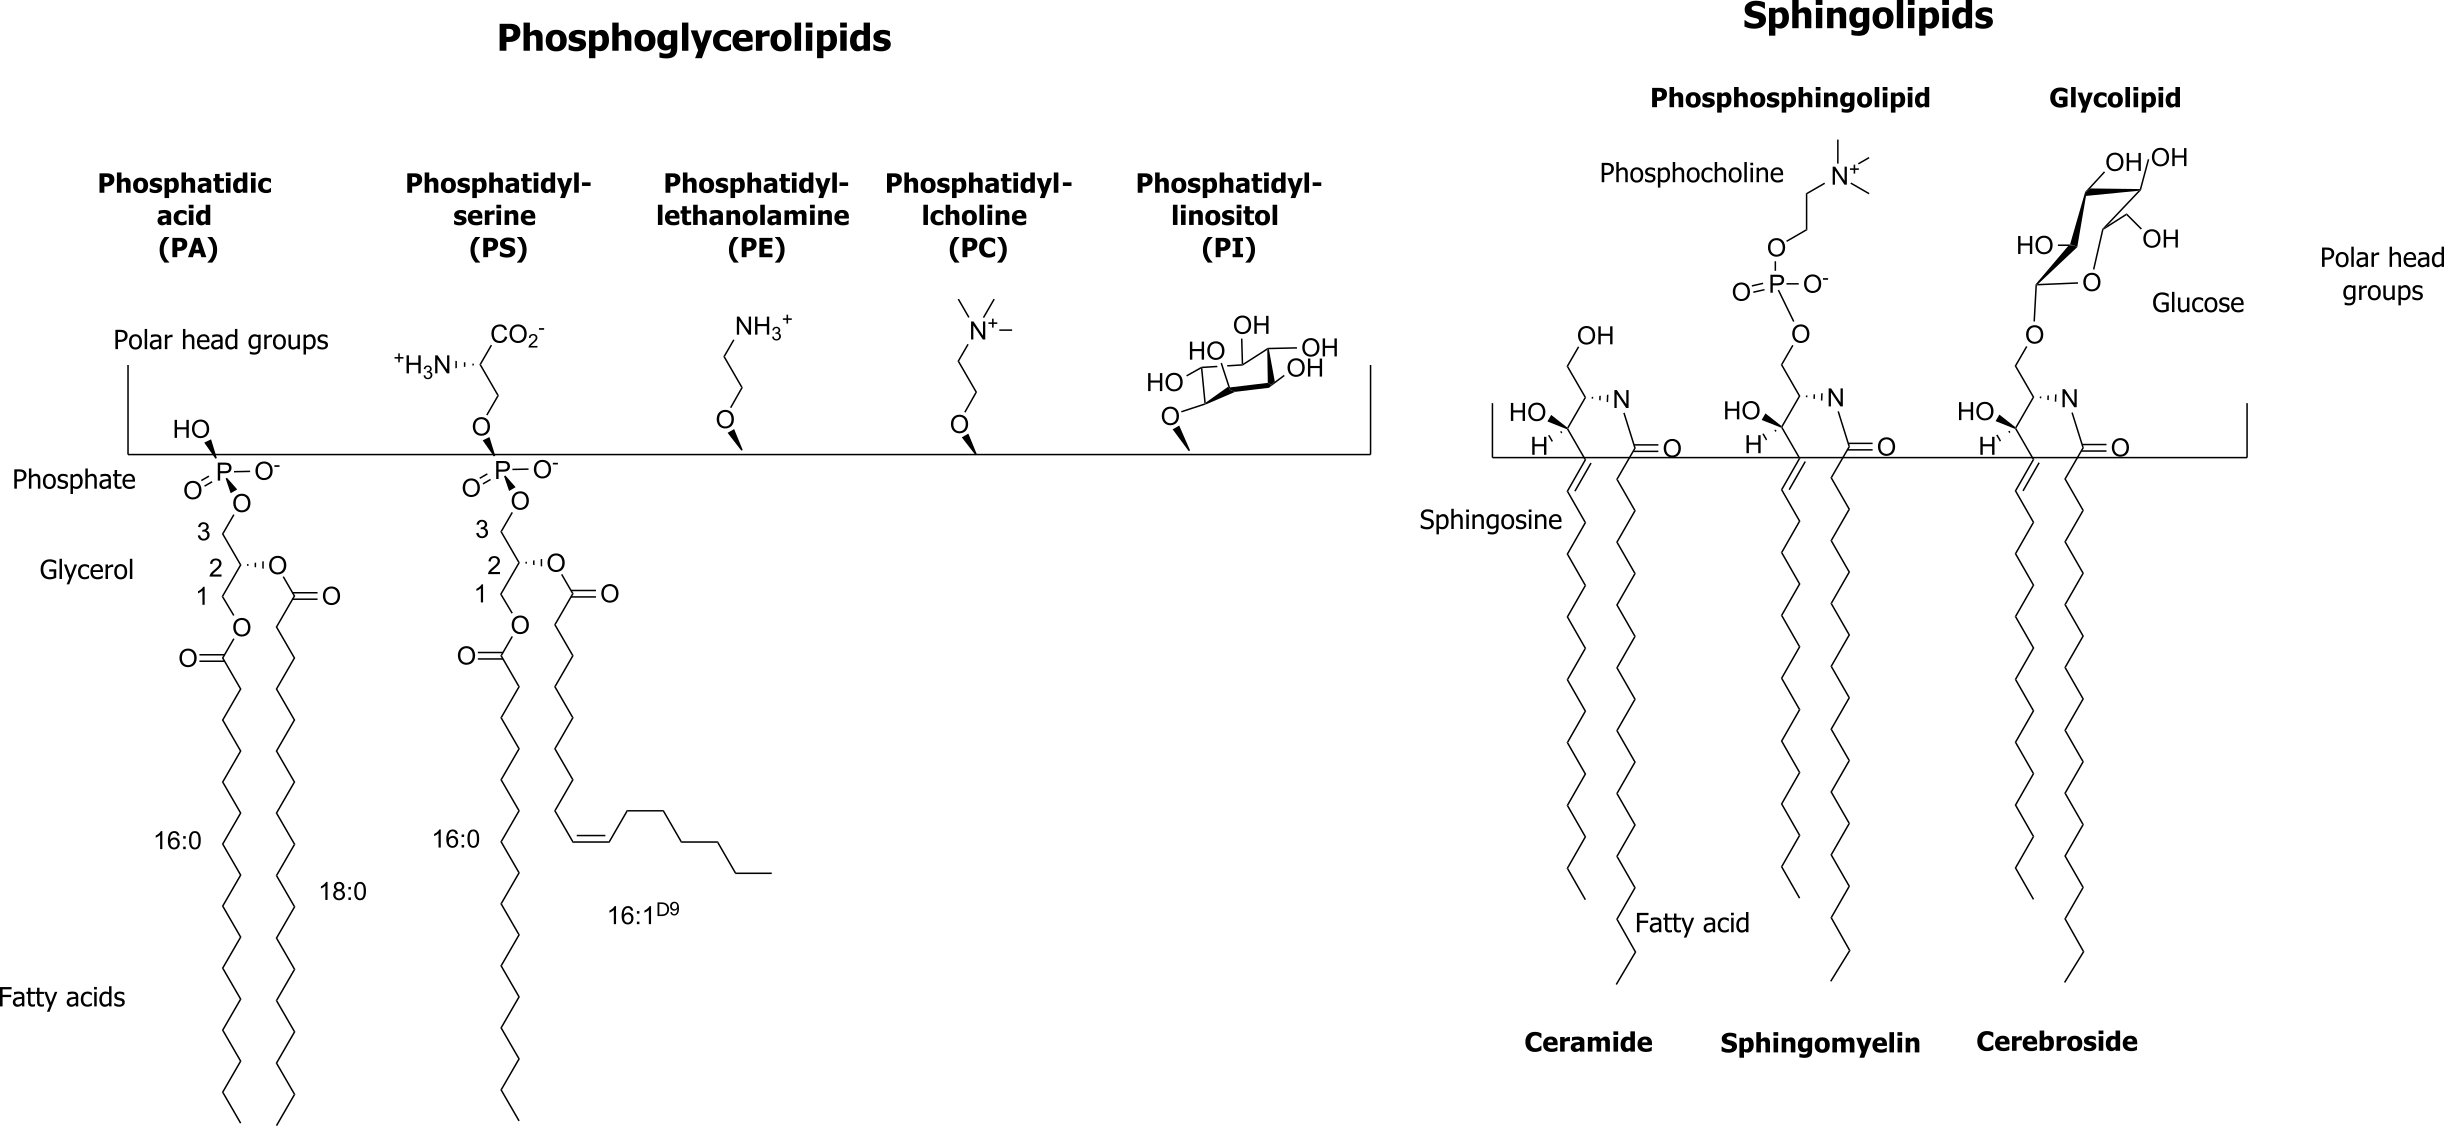 (a) Phosphoglycerolipids; Phosphatidic acid (PA) IUPAC ID: [(2R)-2-octadecanoyloxy-3-phosphonooxypropyl] octadecanoate. Phosphatidylserine (PS) IUPAC ID: (2S)-2-amino-3-[[(2R)-2,3-di(octadecanoyloxy)propoxy]-hydroxyphosphoryl]oxypropanoic acid. Phosphatidylethanolamine (PE). Phosphatidylcholine (PC). Phosphatidylinositol (PI). (b) Sphingolipids; Ceramide IUPAC ID: N-[(E,2S,3R)-1,3-dihydroxyoctadec-4-en-2-yl]butanamide. Sphingomyelin IUPAC ID: [(E,2S,3R)-2-(docosanoylamino)-3-hydroxyoctadec-4-enyl] 2-(trimethylazaniumyl)ethyl phosphate and is a phosphosphingolipid. Cerebroside IUPAC ID: (2R)-2-hydroxy-N-[(2S,3R,4E,8E)-3-hydroxy-9-methyl-1-[(2R,3R,4S,5S,6R)-3,4,5-trihydroxy-6-(hydroxymethyl)oxan-2-yl]oxypentadeca-4,8-dien-2-yl]octadecanamide and is a glycolipid.